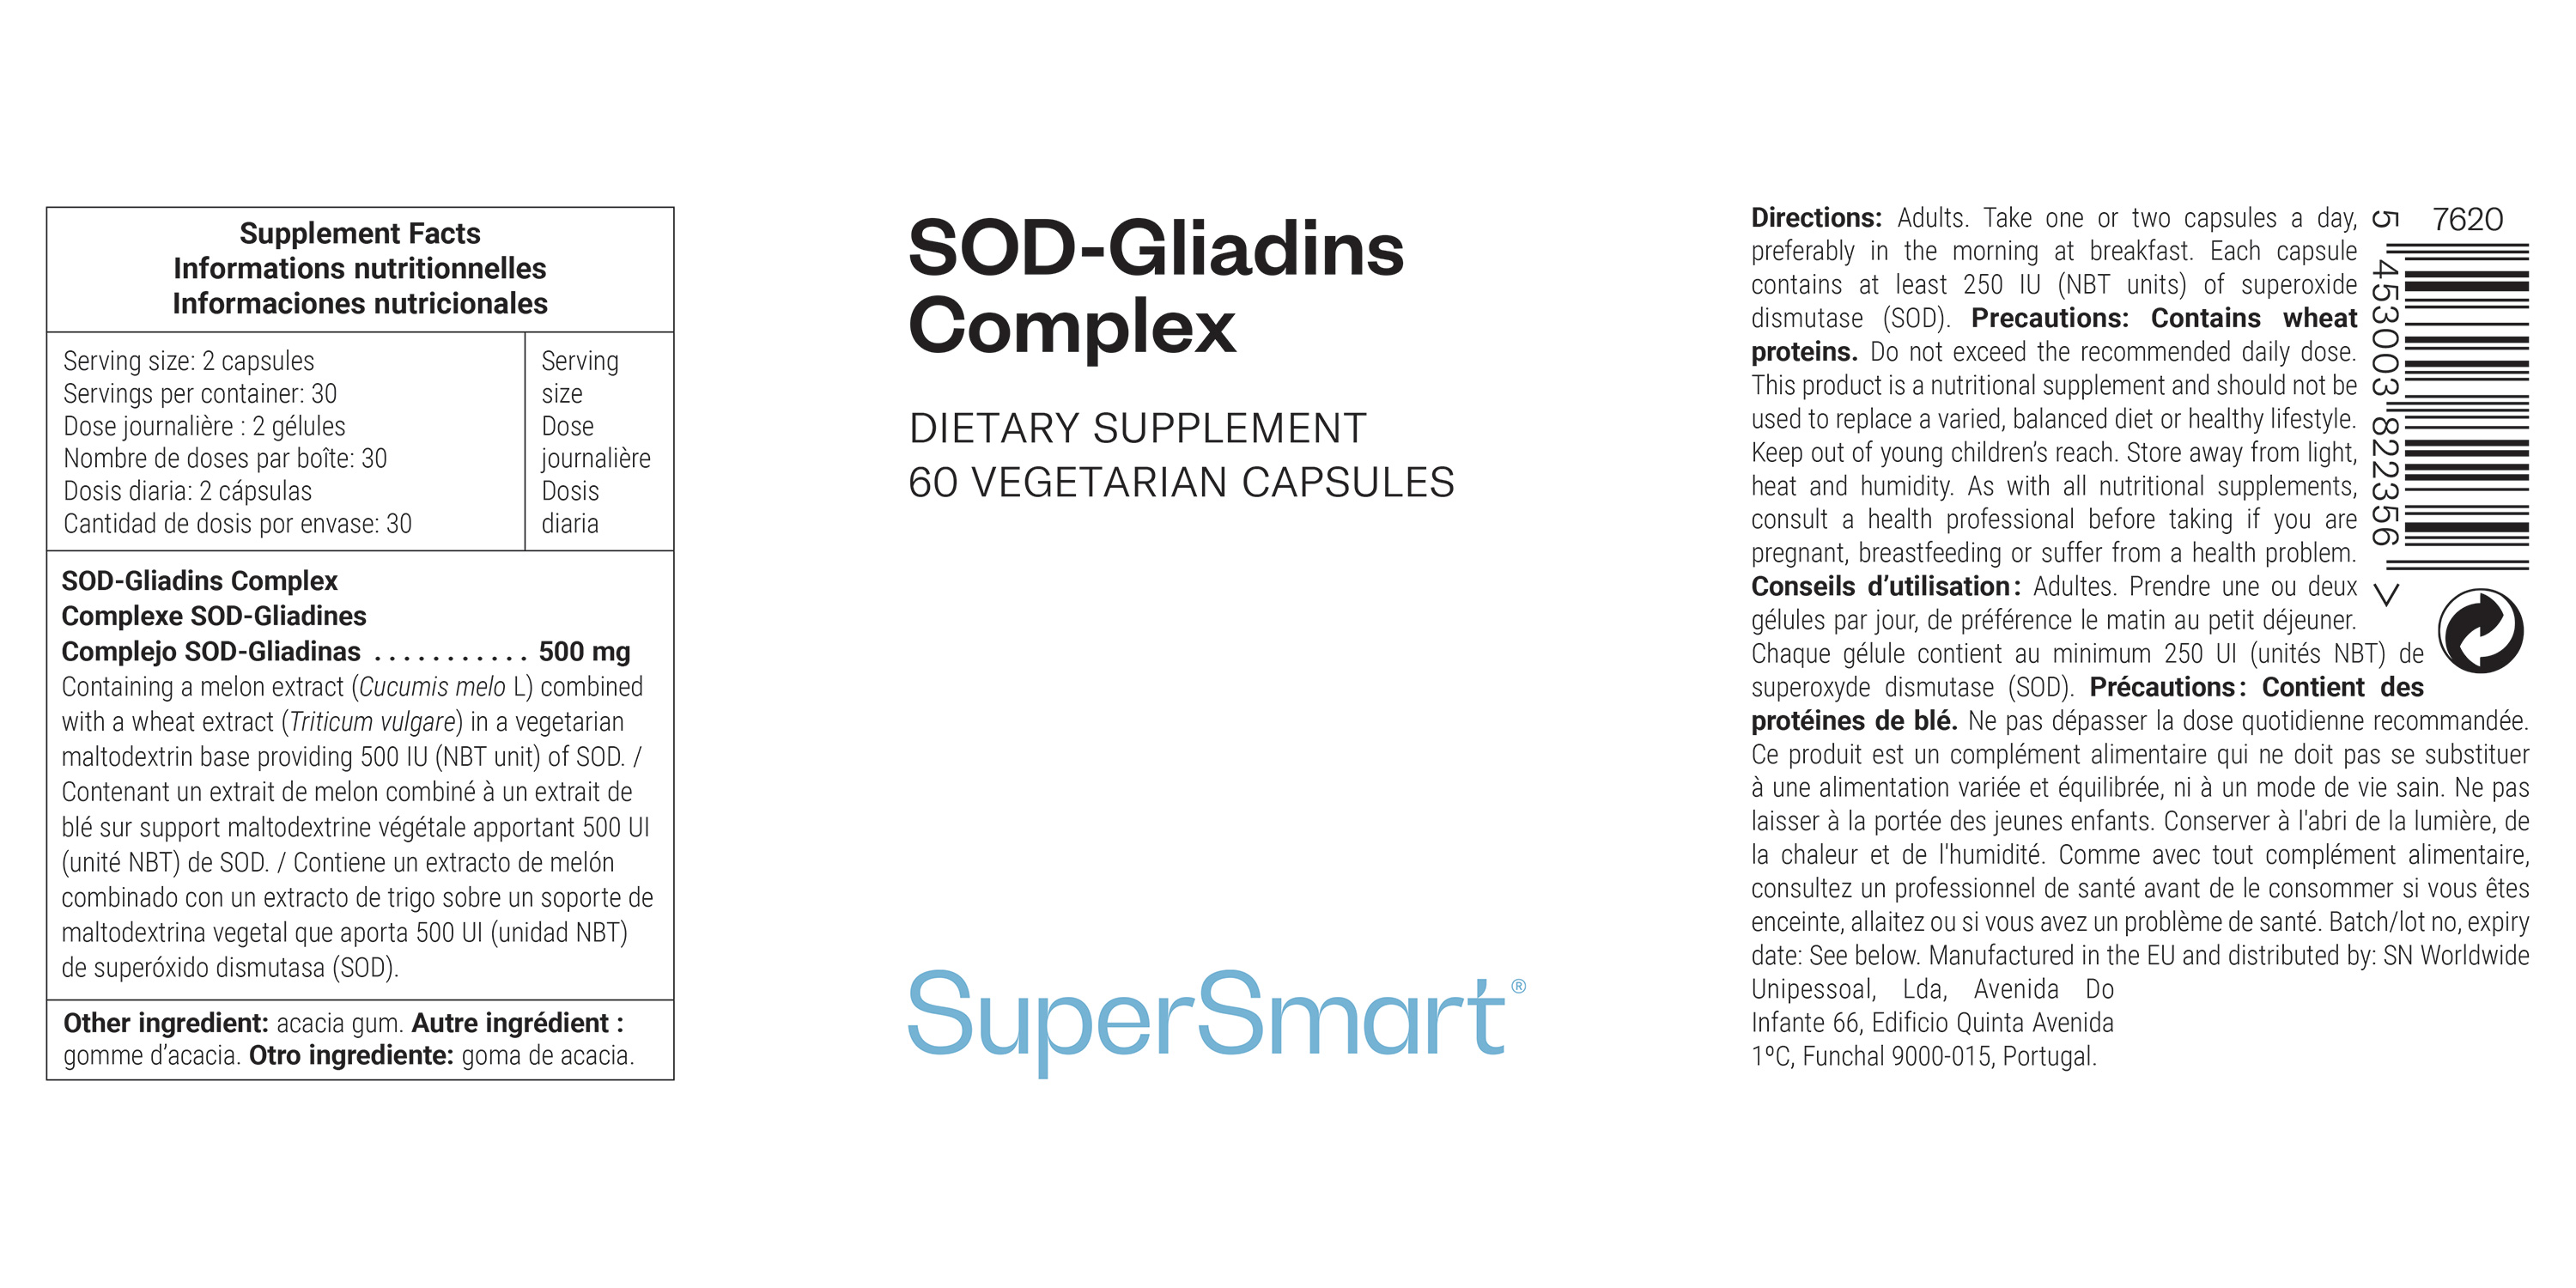 SOD-Gliadins Complex